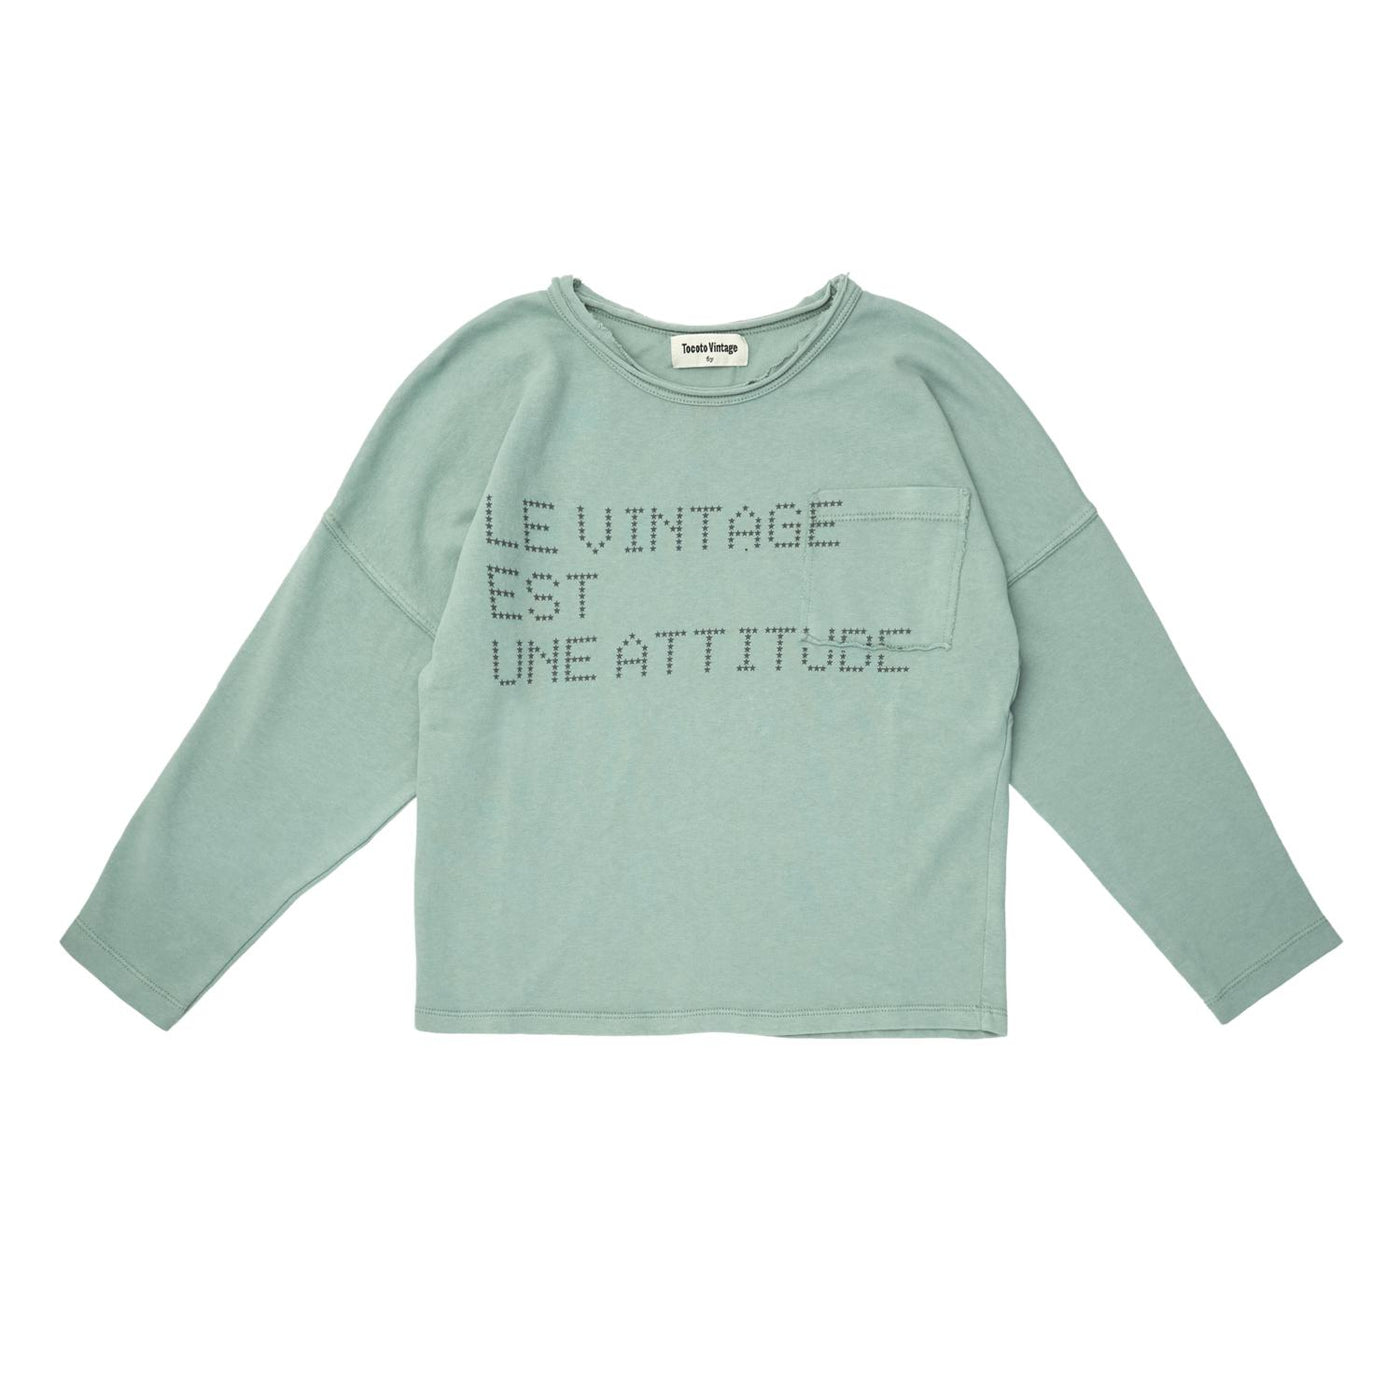 "Attitude" Kid T-Shirt